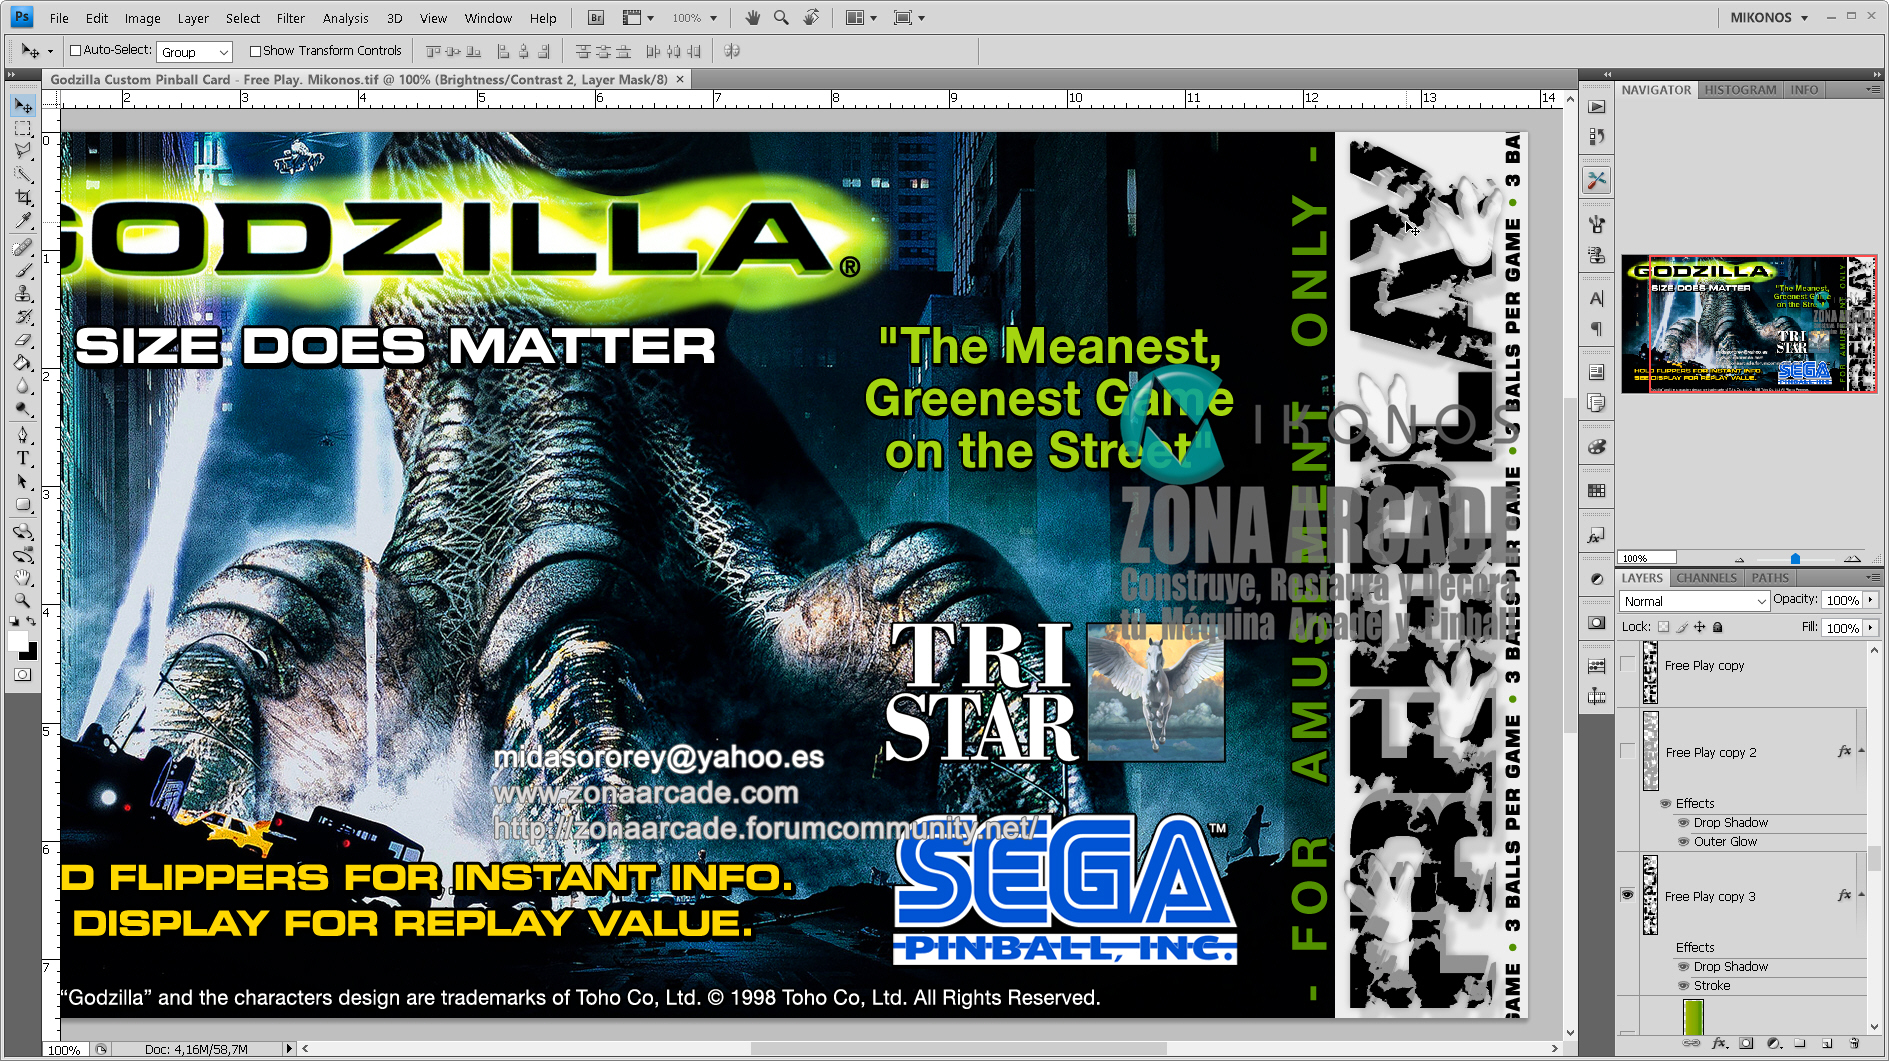 Godzilla%20Custom%20Pinball%20Card%20-%20Free%20Play.%20Mikonos2.jpg